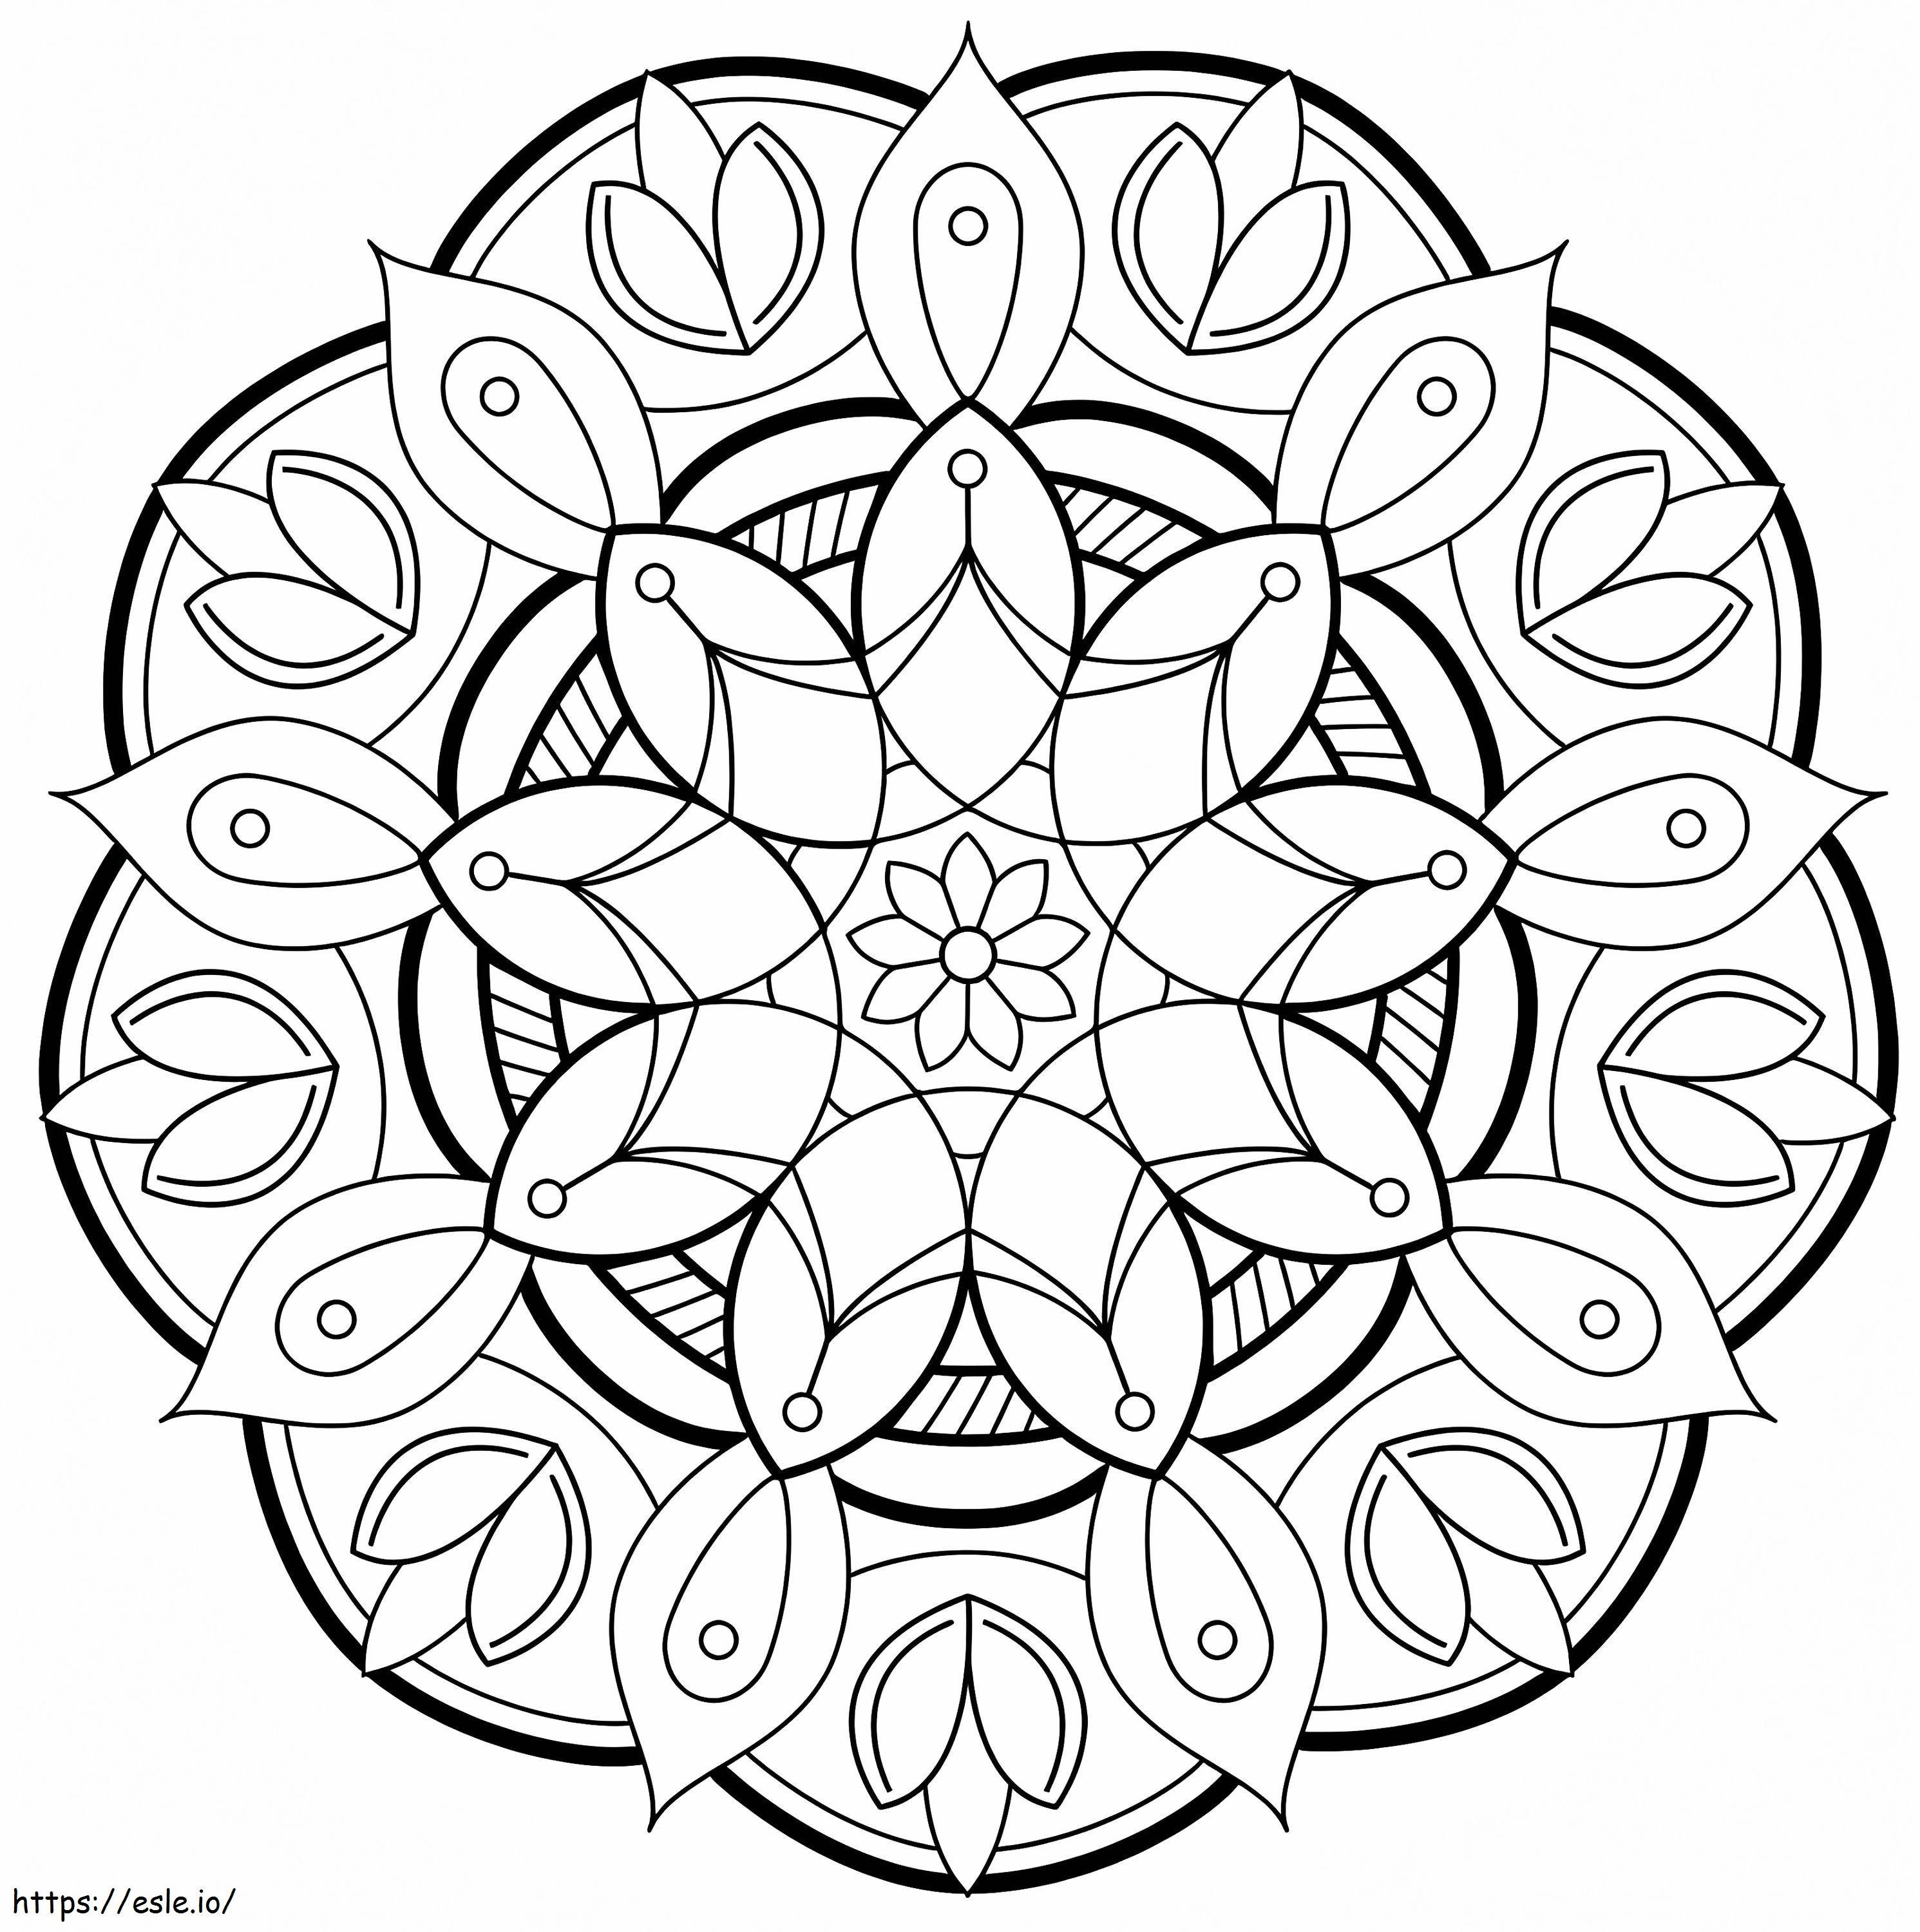 Flower Mandala 18 coloring page